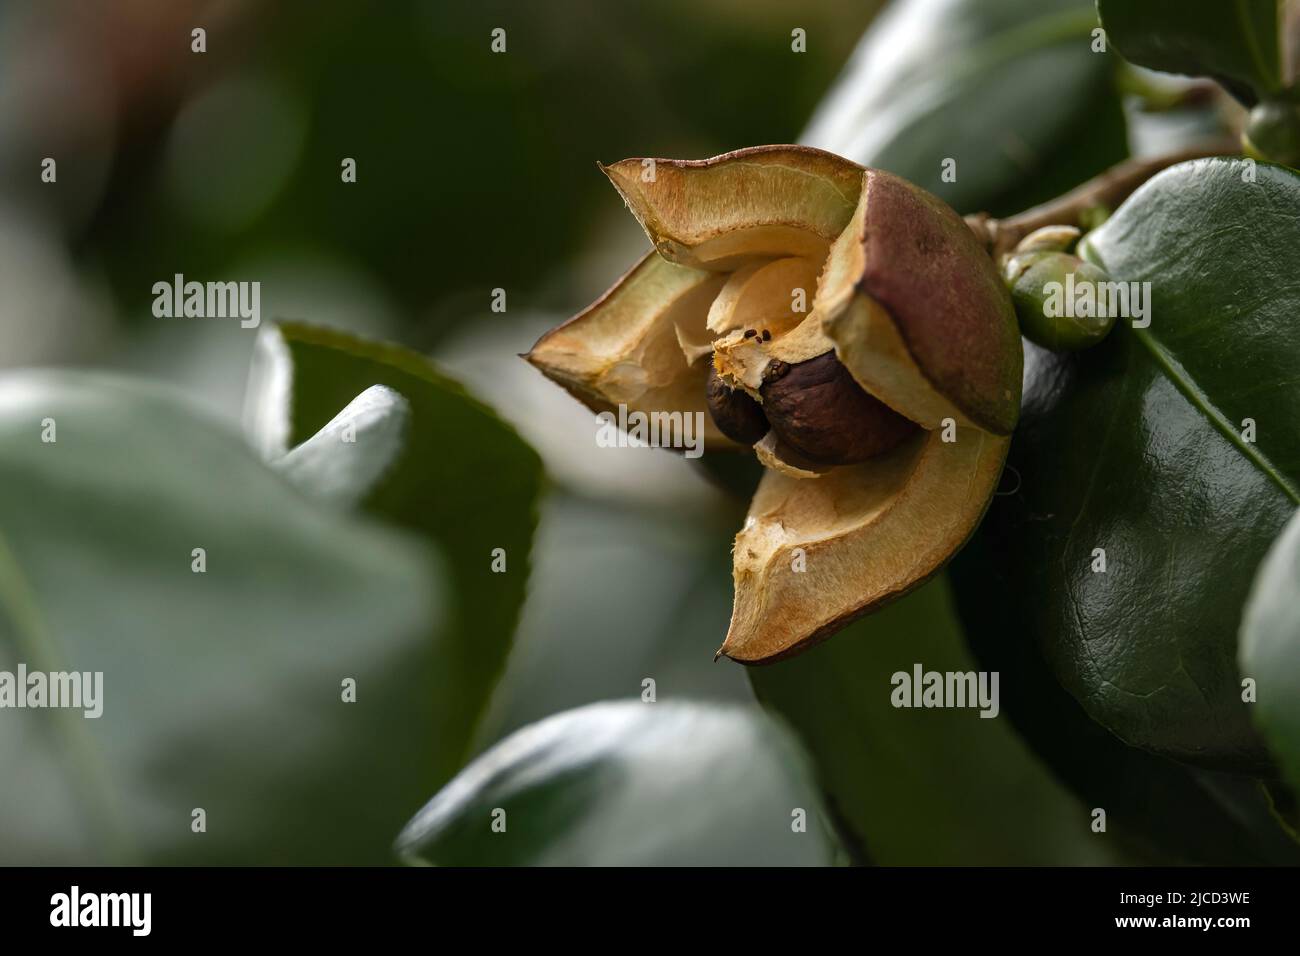 Japanese camellia (Camelia Japonica) fruit close up Stock Photo